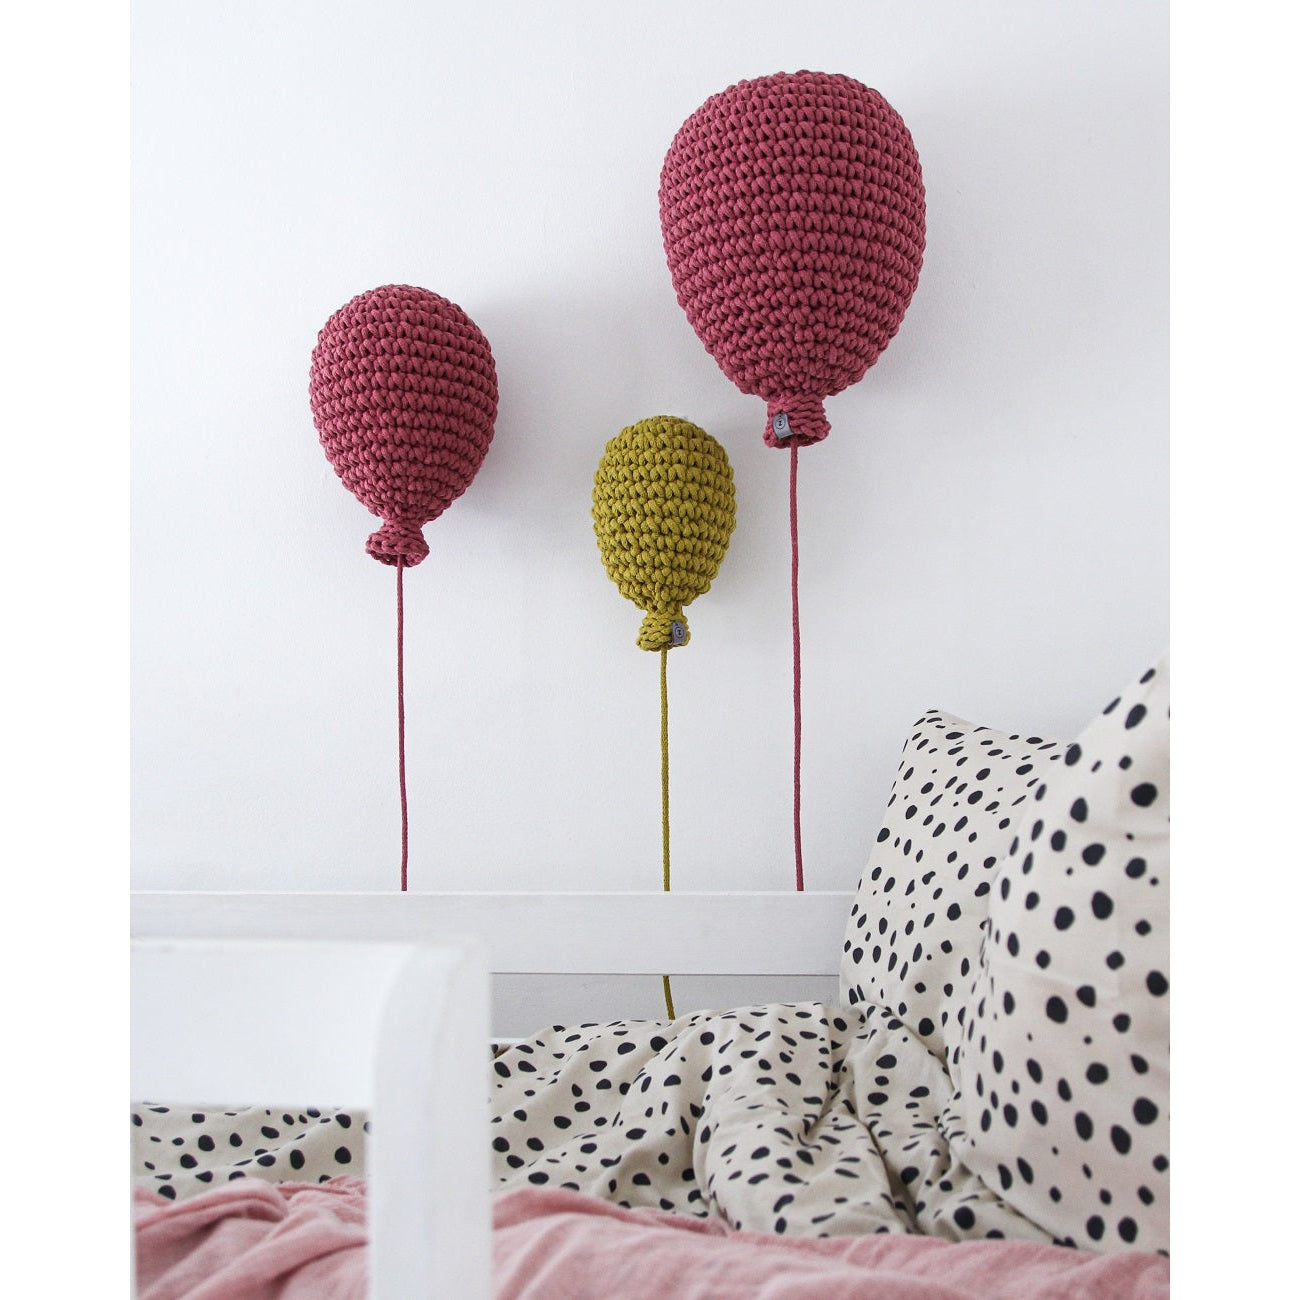 Crochet Balloon | Mint-vendor-unknown-Yes Bebe